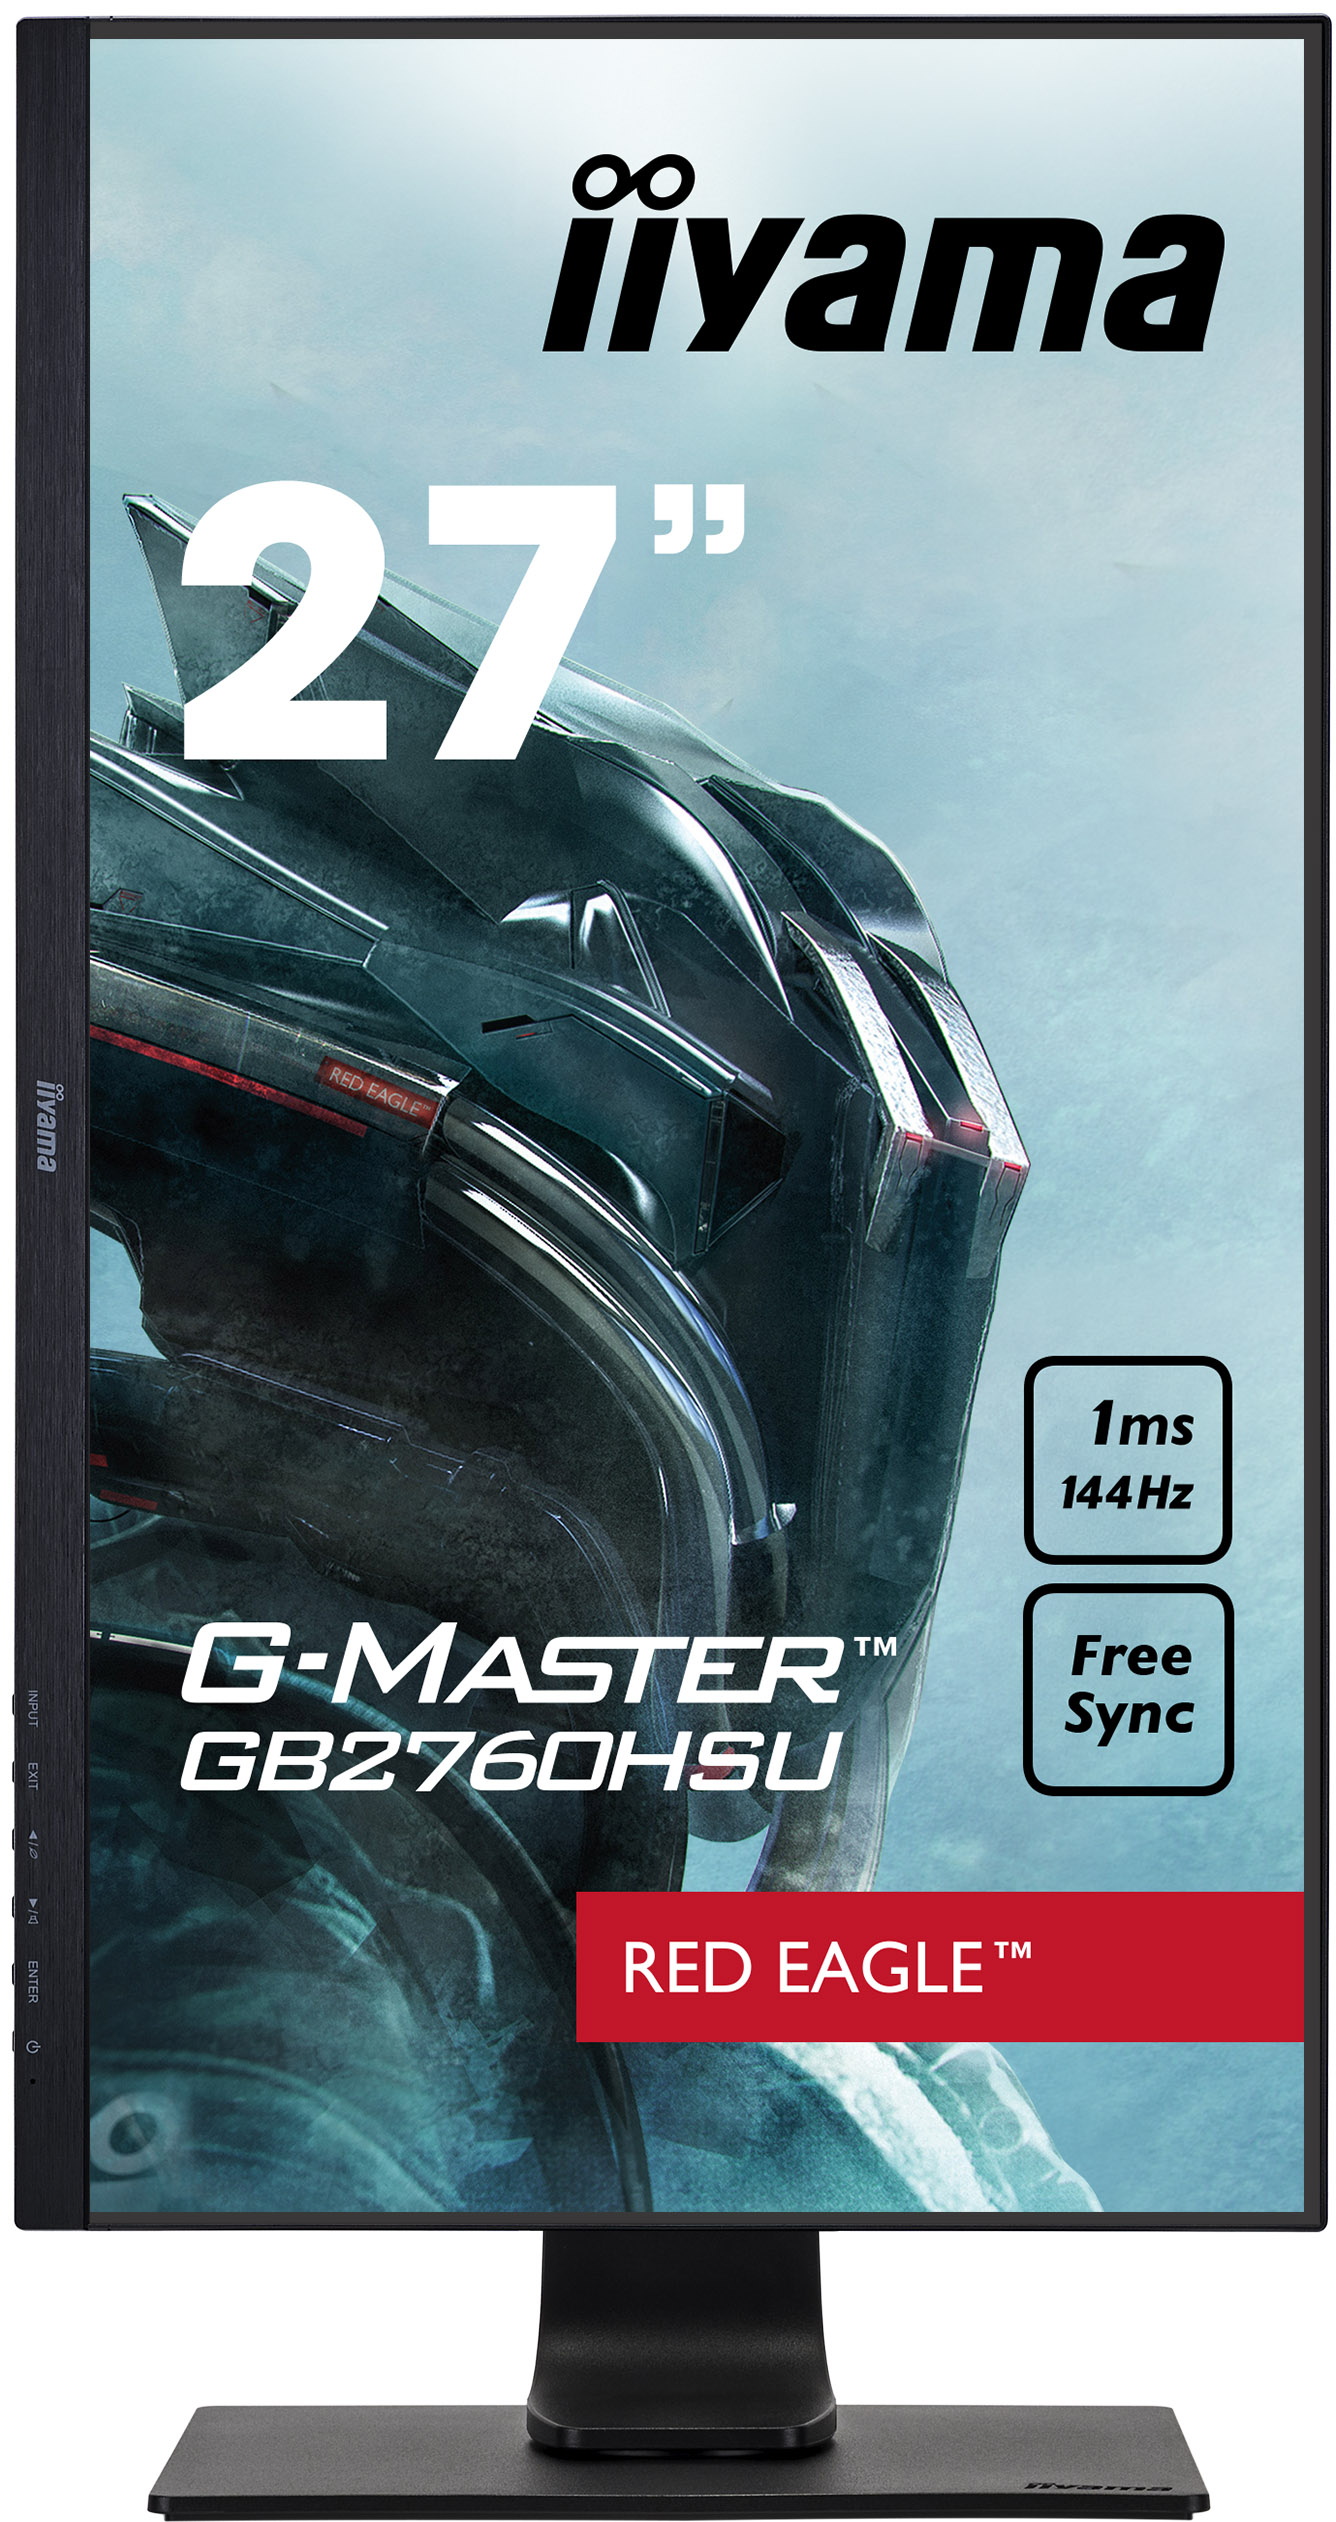 Iiyama G-MASTER GB2760HSU-B1 RED EAGLE | 27" | 144Hz | Gaming Monitor